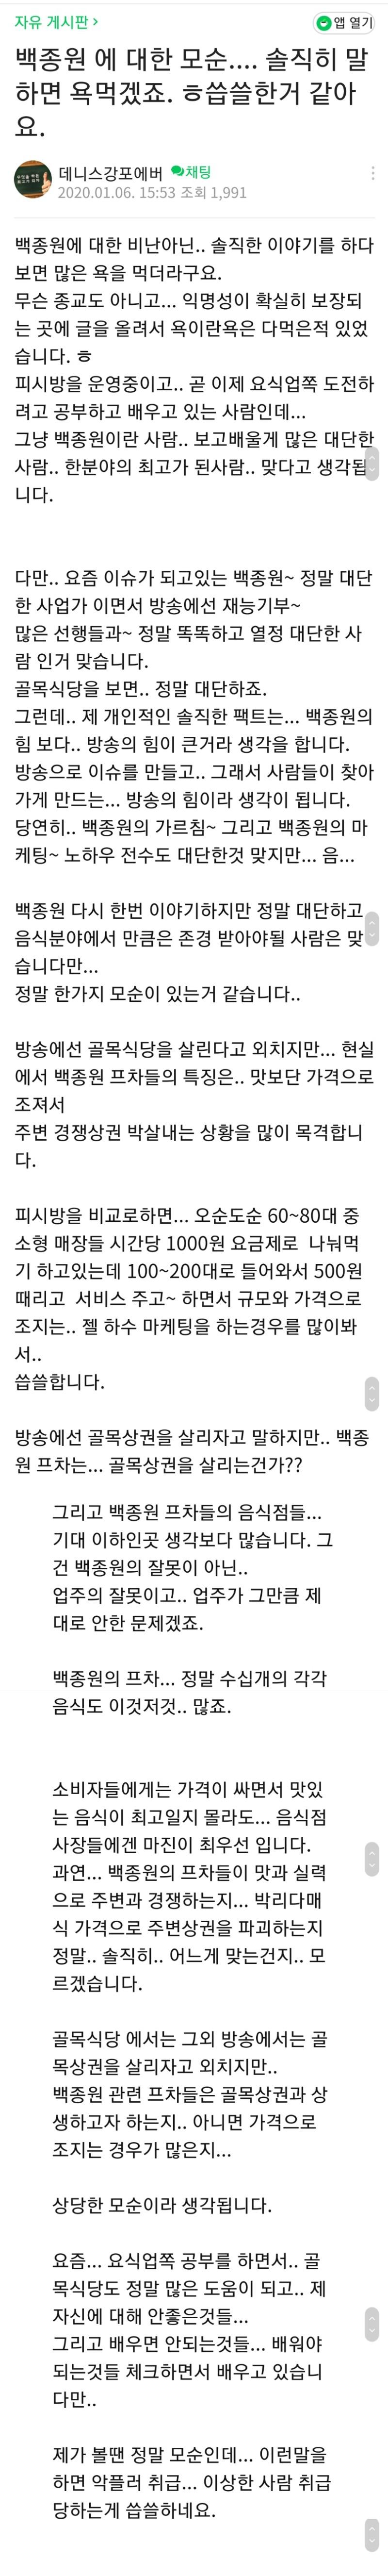 Screenshot_20200111-114207_Samsung Internet.jpg